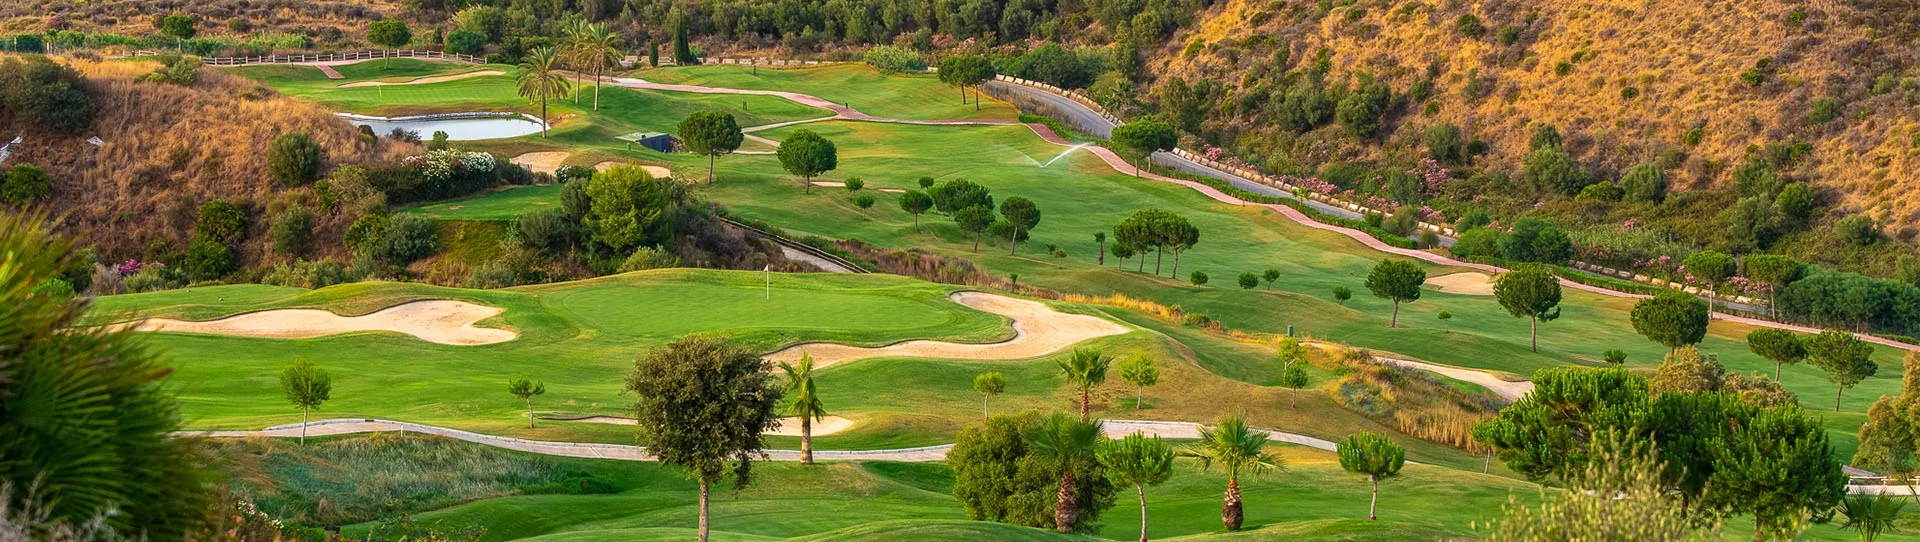 Spain golf courses - Calanova Golf Course - Photo 3